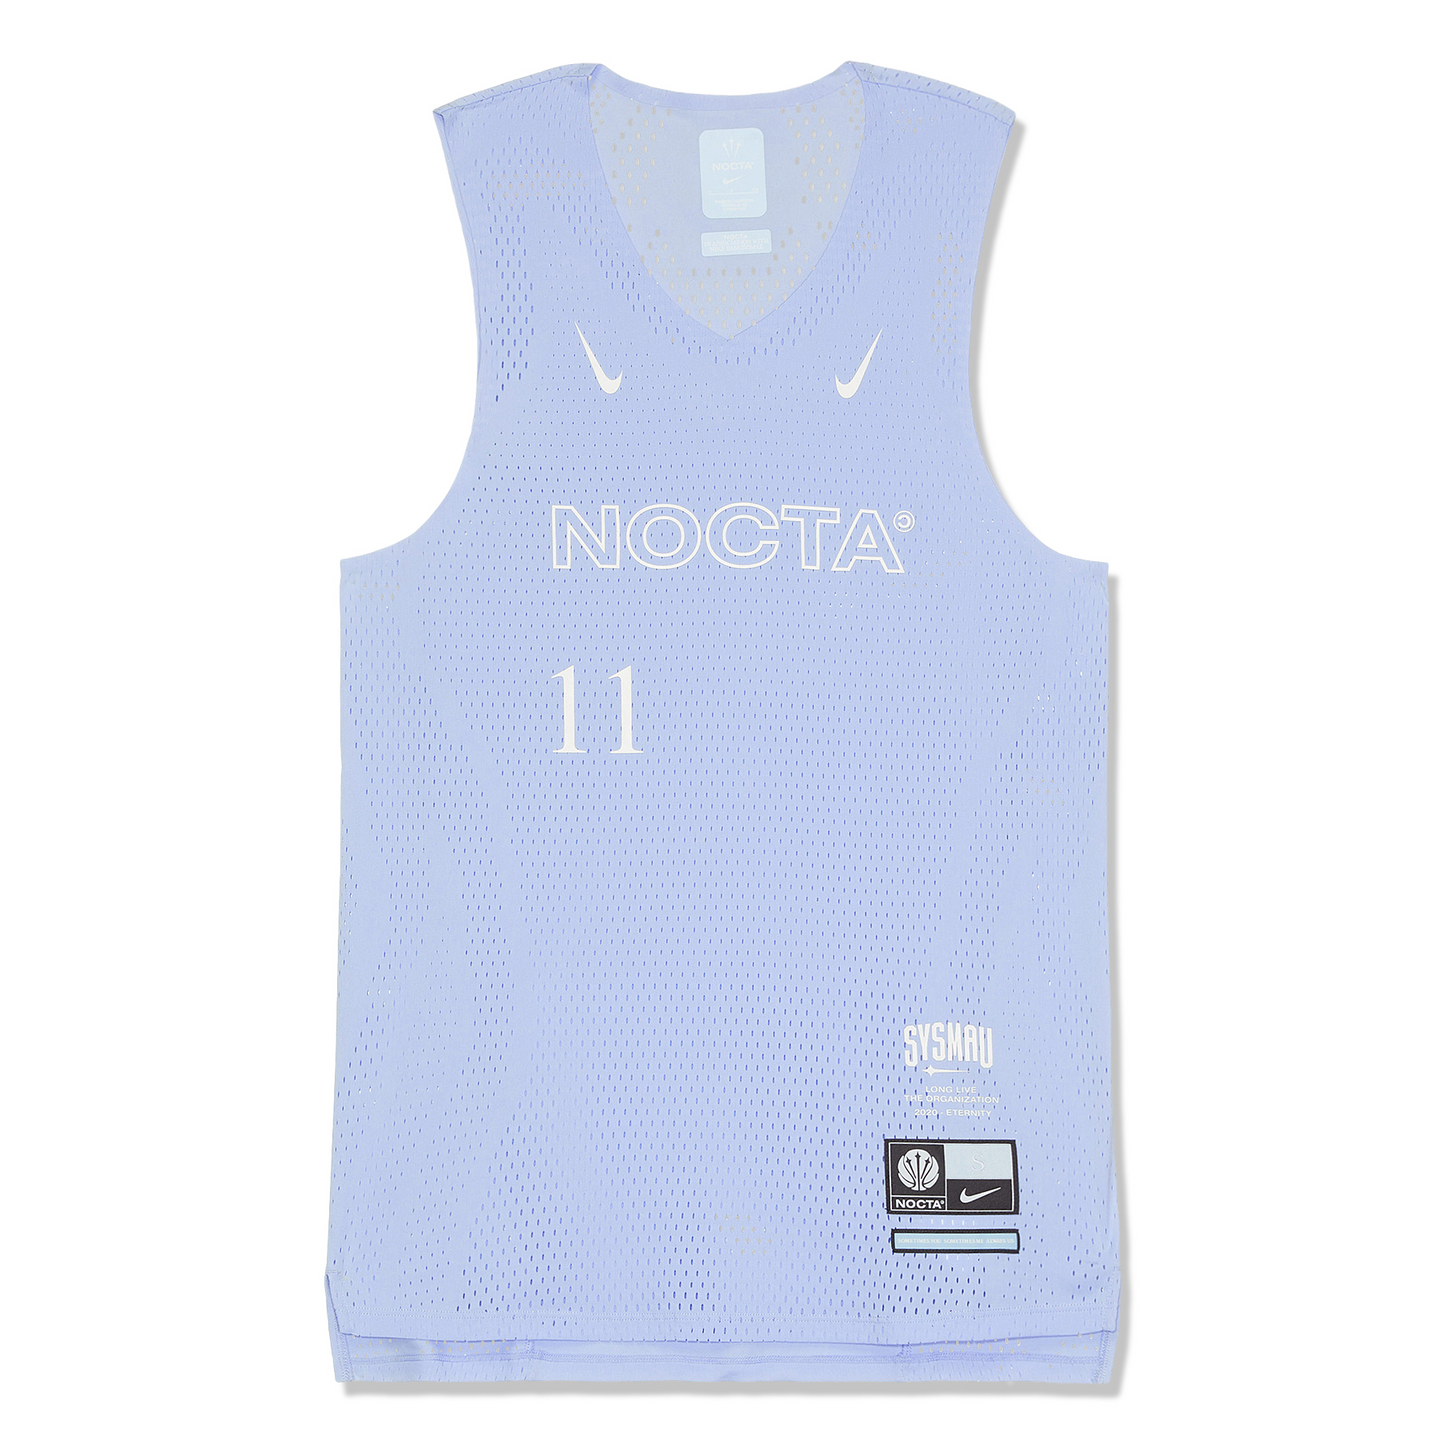 Nike Nocta Jersey (Cobalt Bliss/White)